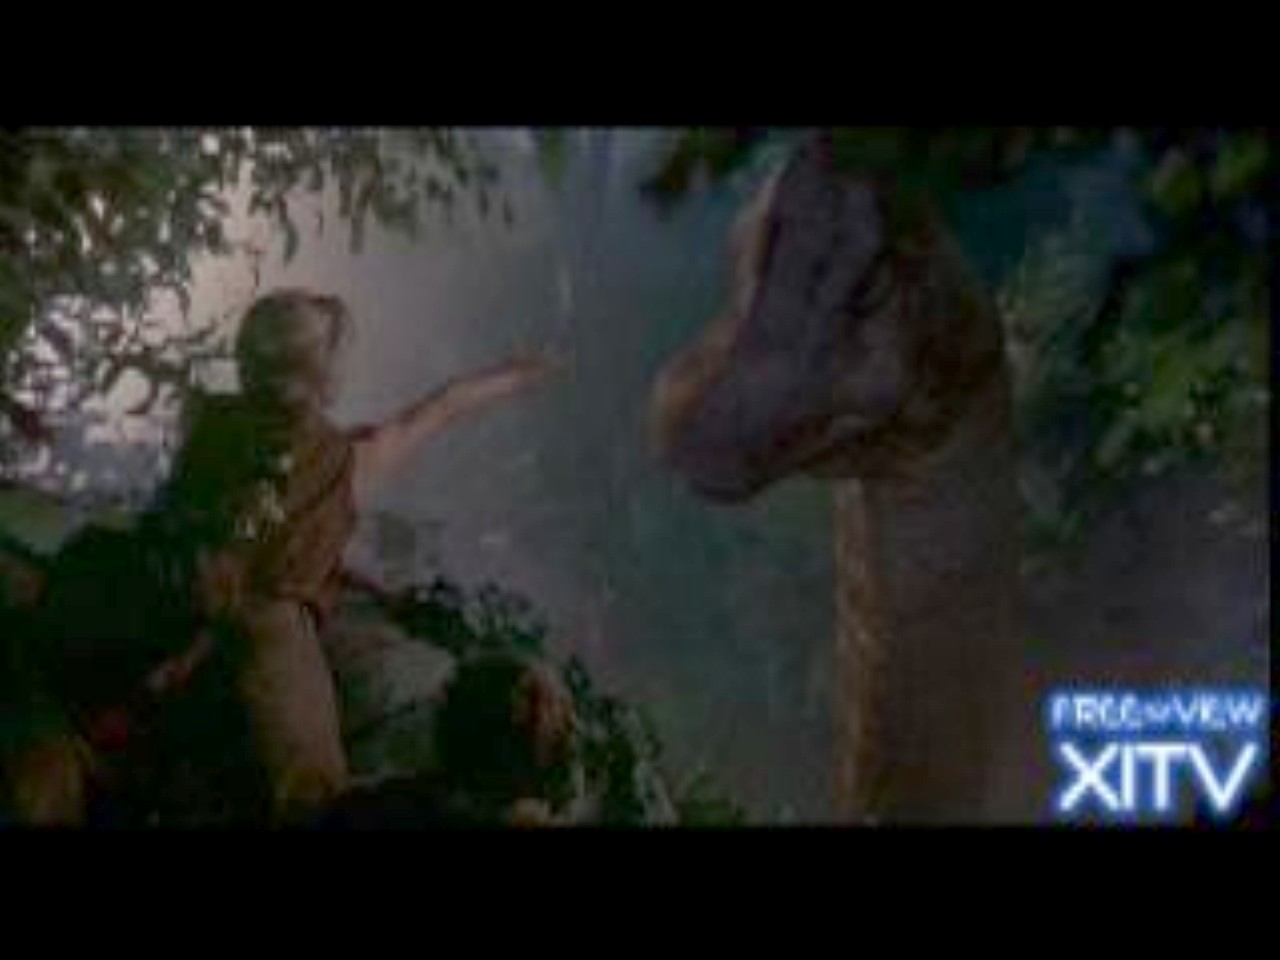 XITV FREE <> VIEW Jurassic Park! Starring Laura Dern! XITV Is Must See TV!